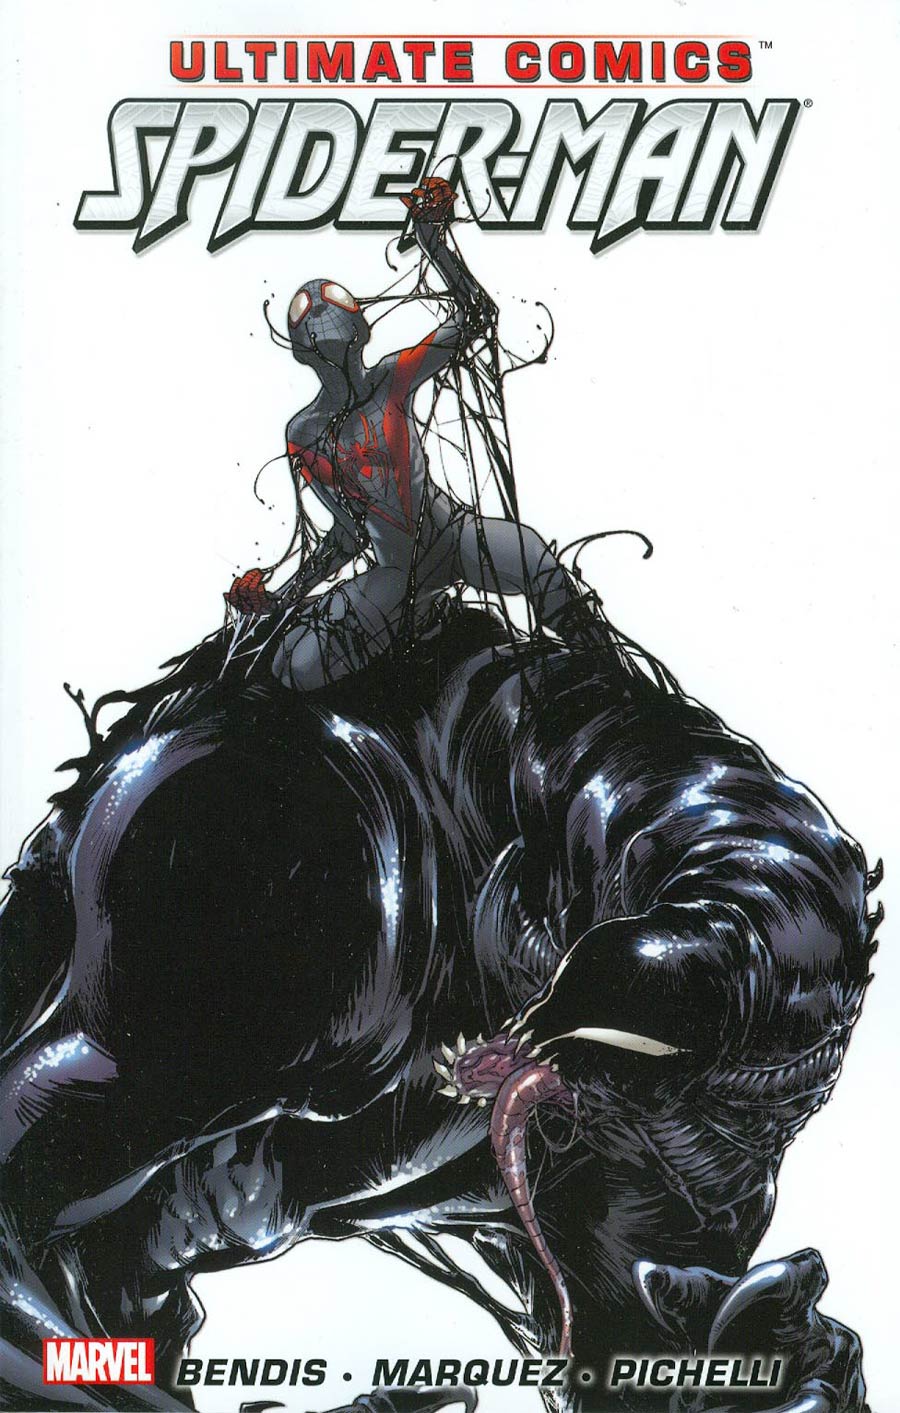 Ultimate Comics Spider-Man By Brian Michael Bendis Vol 4 TP